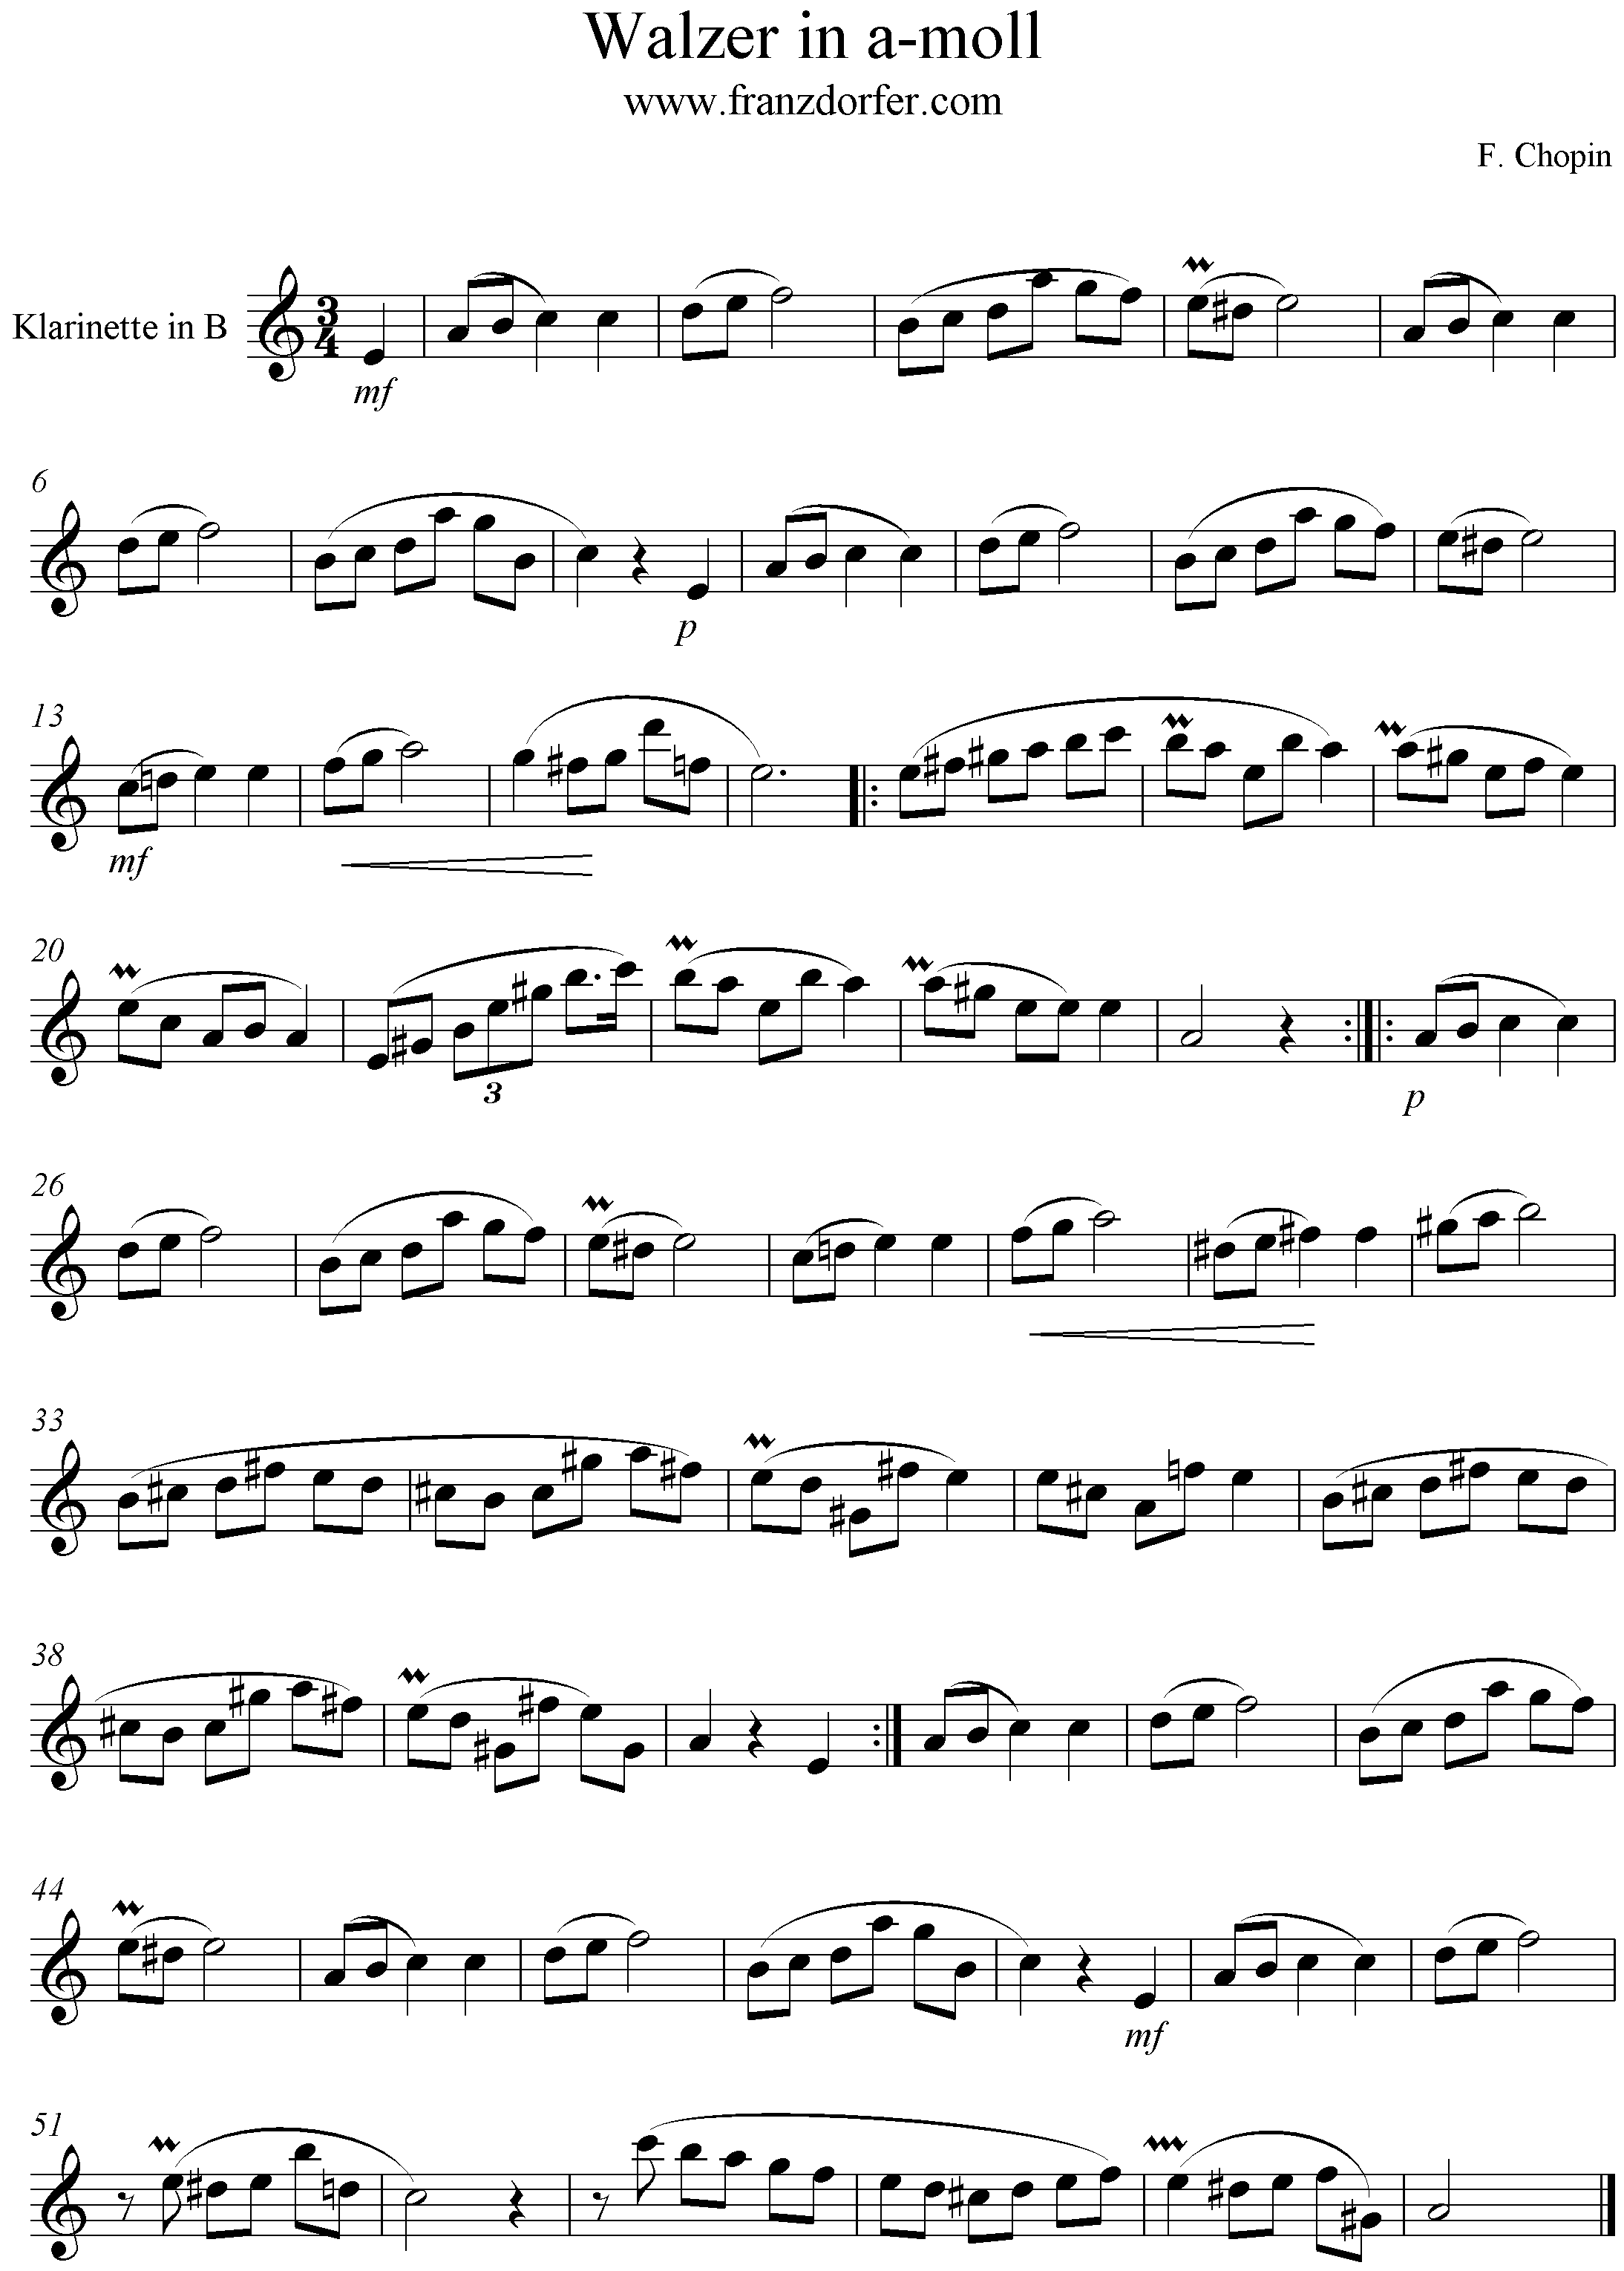 Chopin, Walzer in a-moll, B150